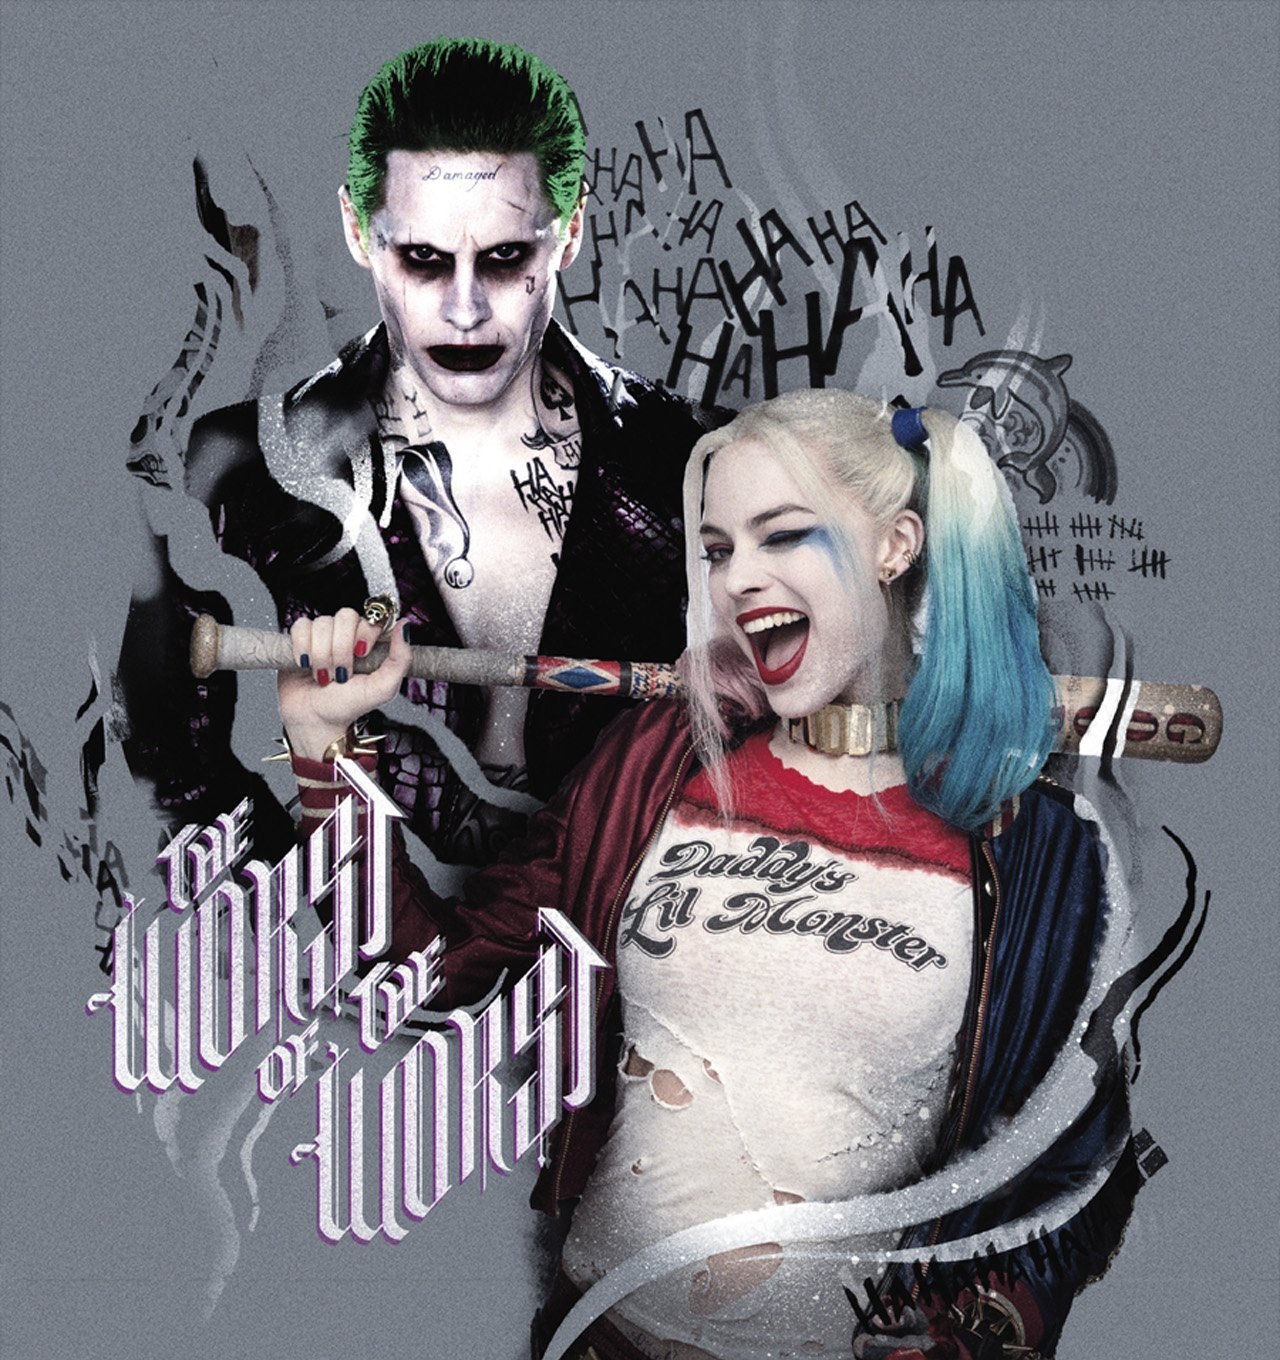 Harley Quinn Joker - Suicide Squad фото (39985795) - Fanpop